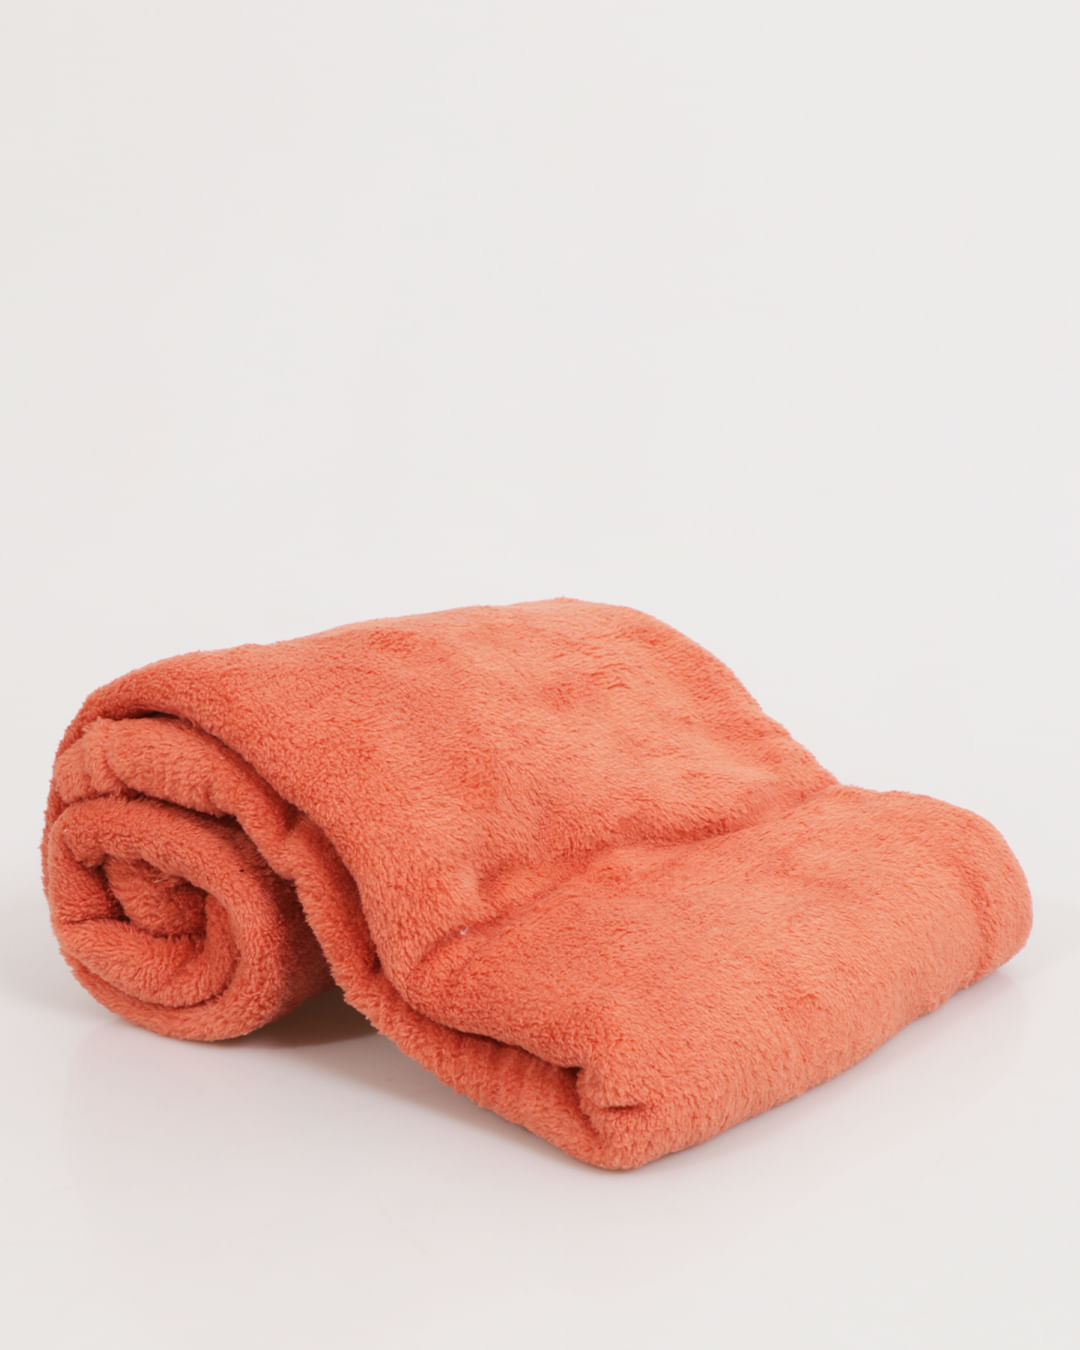 Cobertor-90x110-Arte-Cazza-Baby---Terracota-Medio